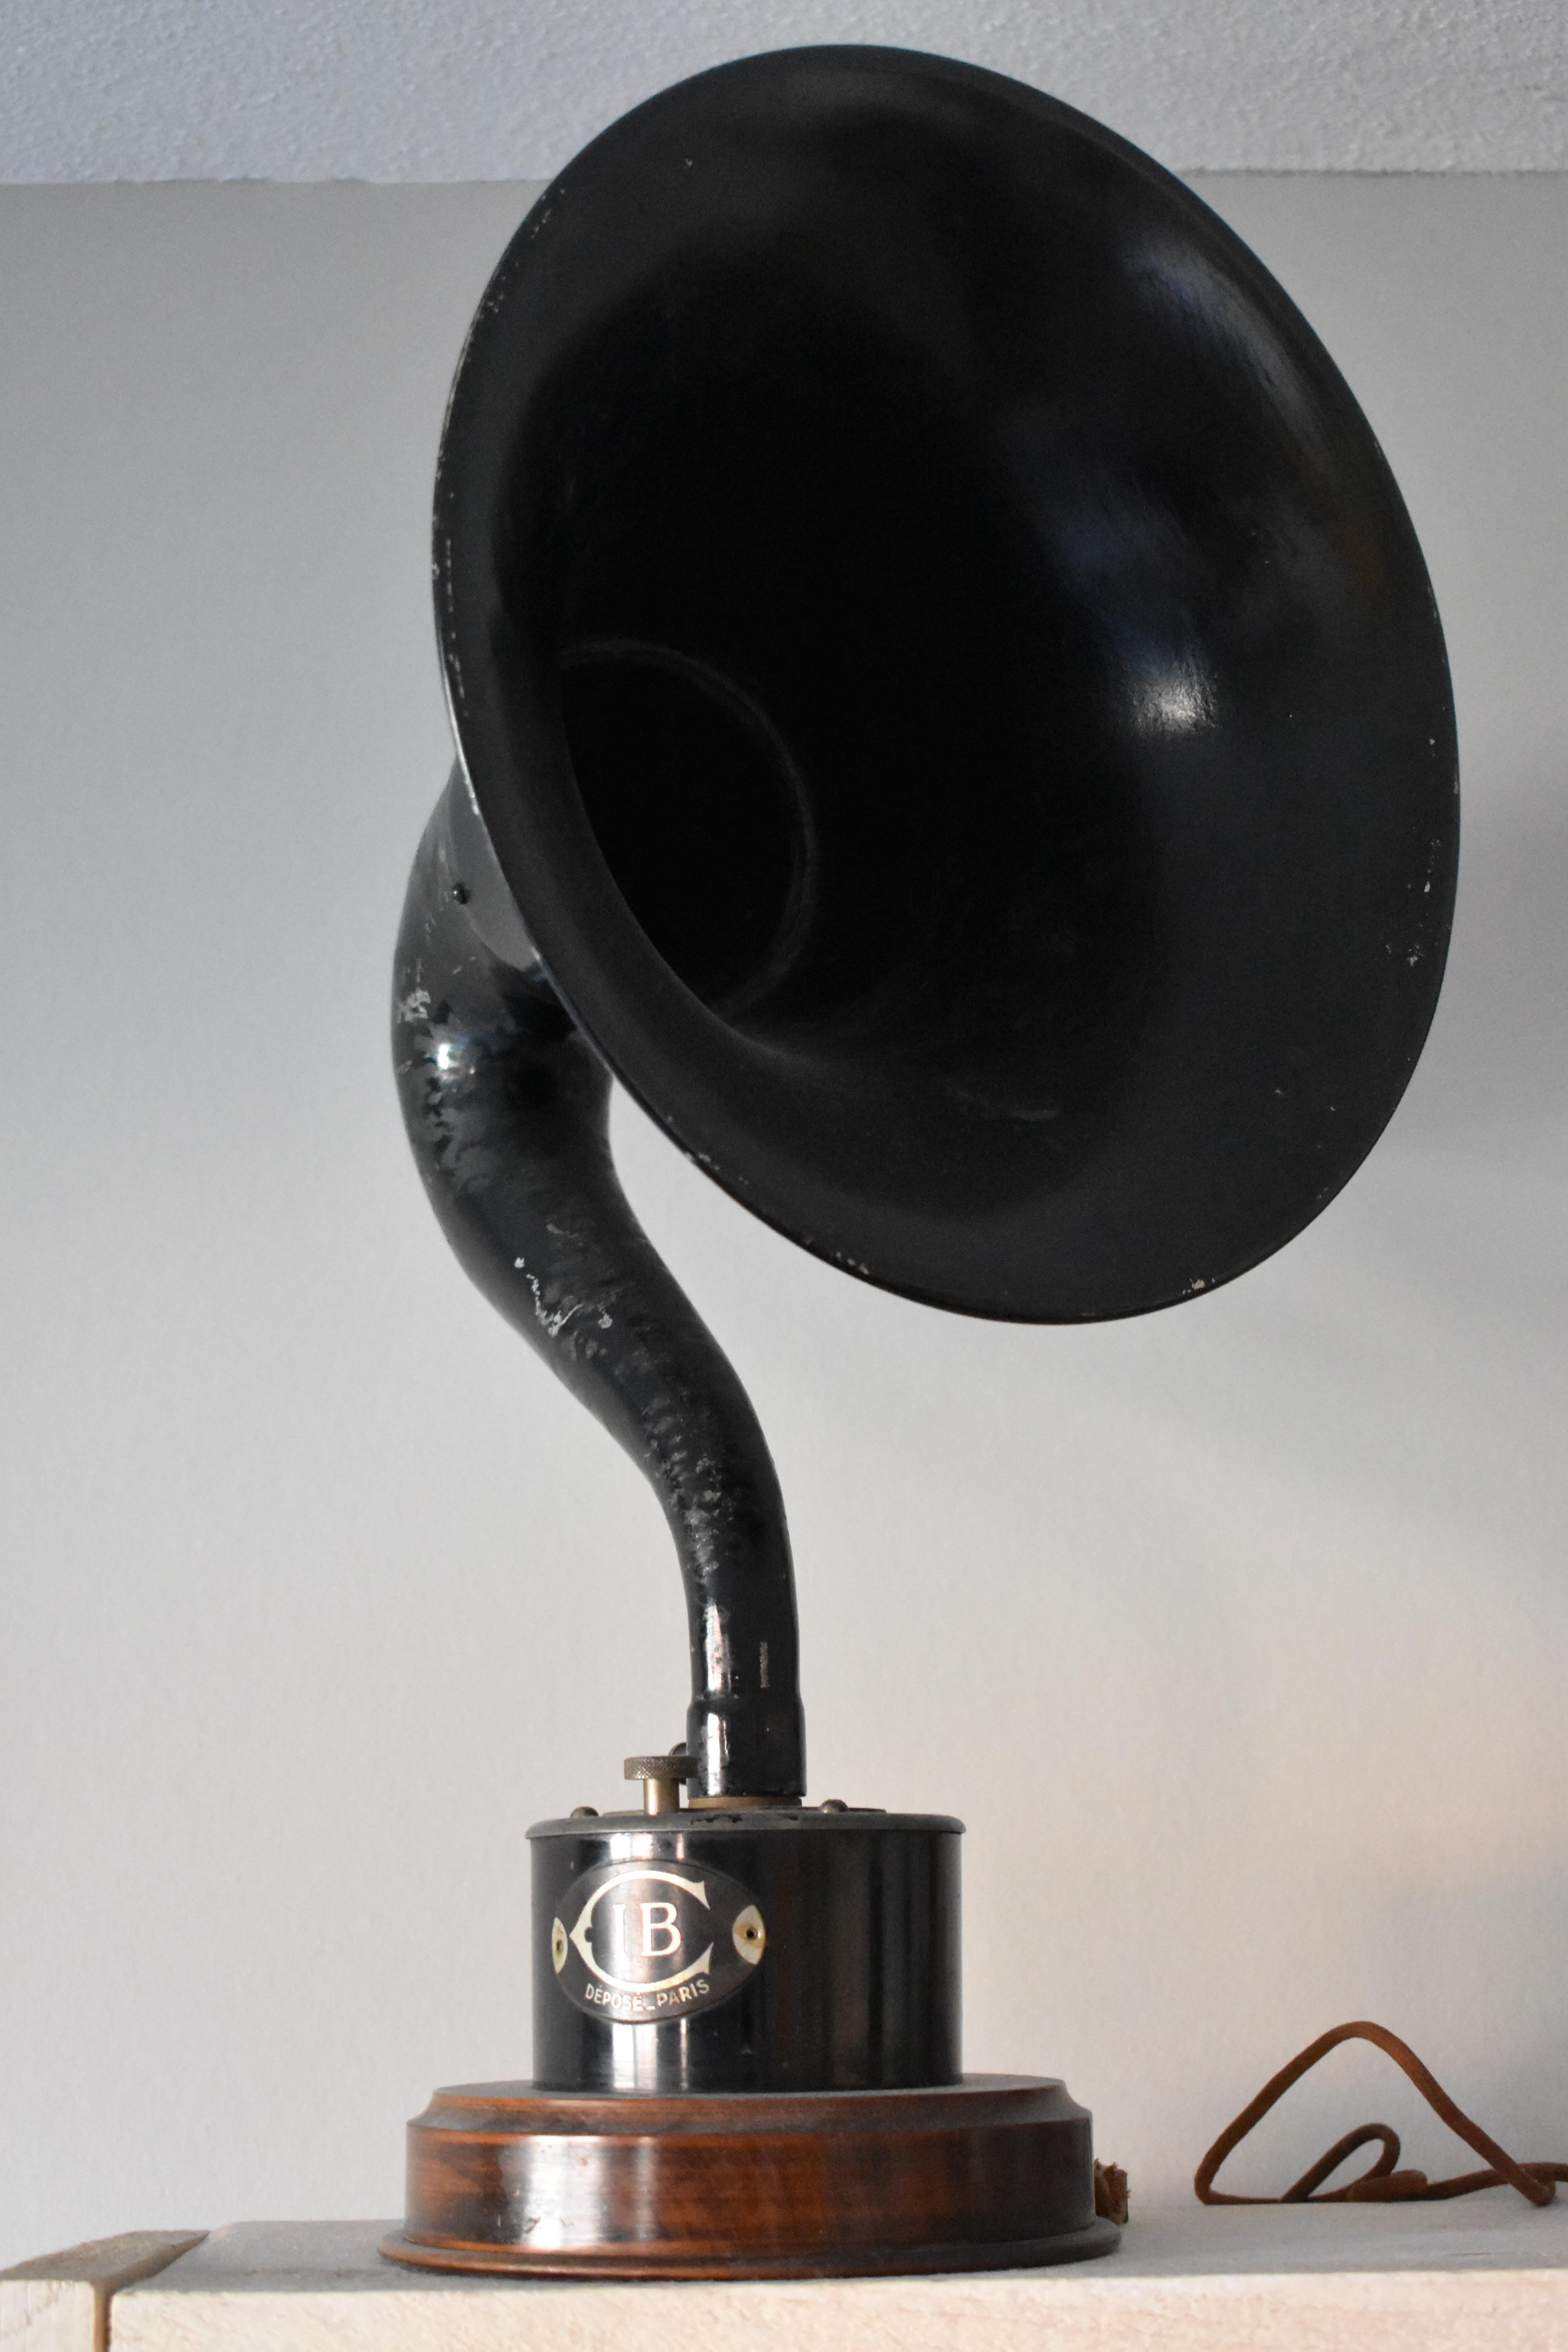 Vintage industrial decorative horn speaker, circa 1930.